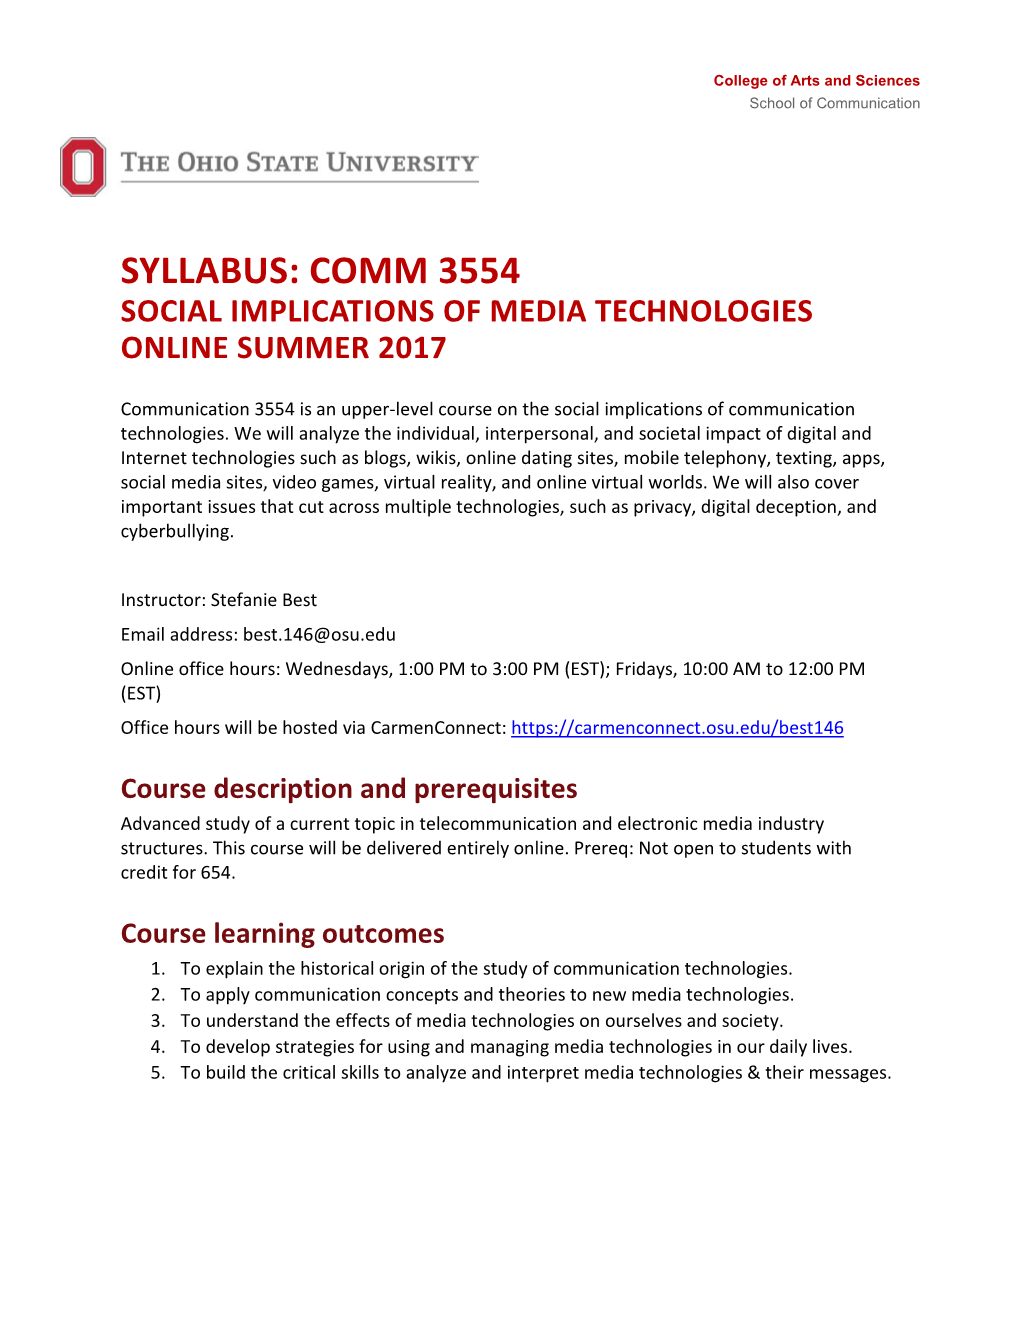 Comm 3554 Social Implications of Media Technologies Online Summer 2017